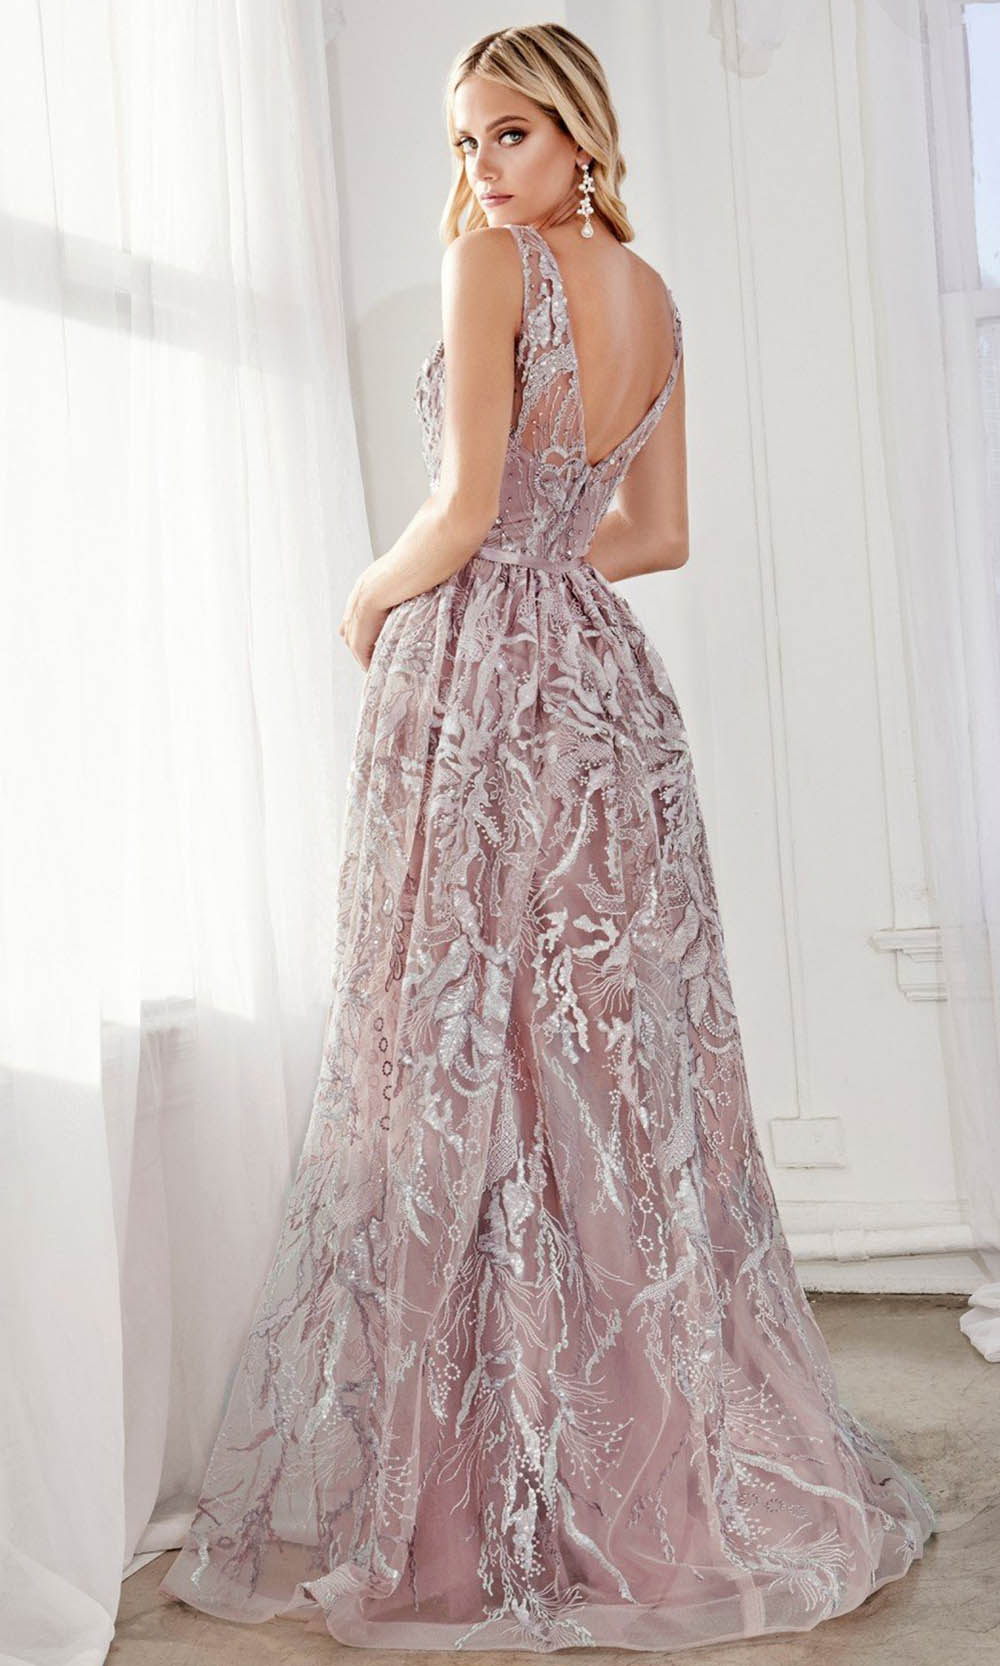 Cinderella Divine - CR852SC Jewel Neck A-line Lace Dress In Champagne